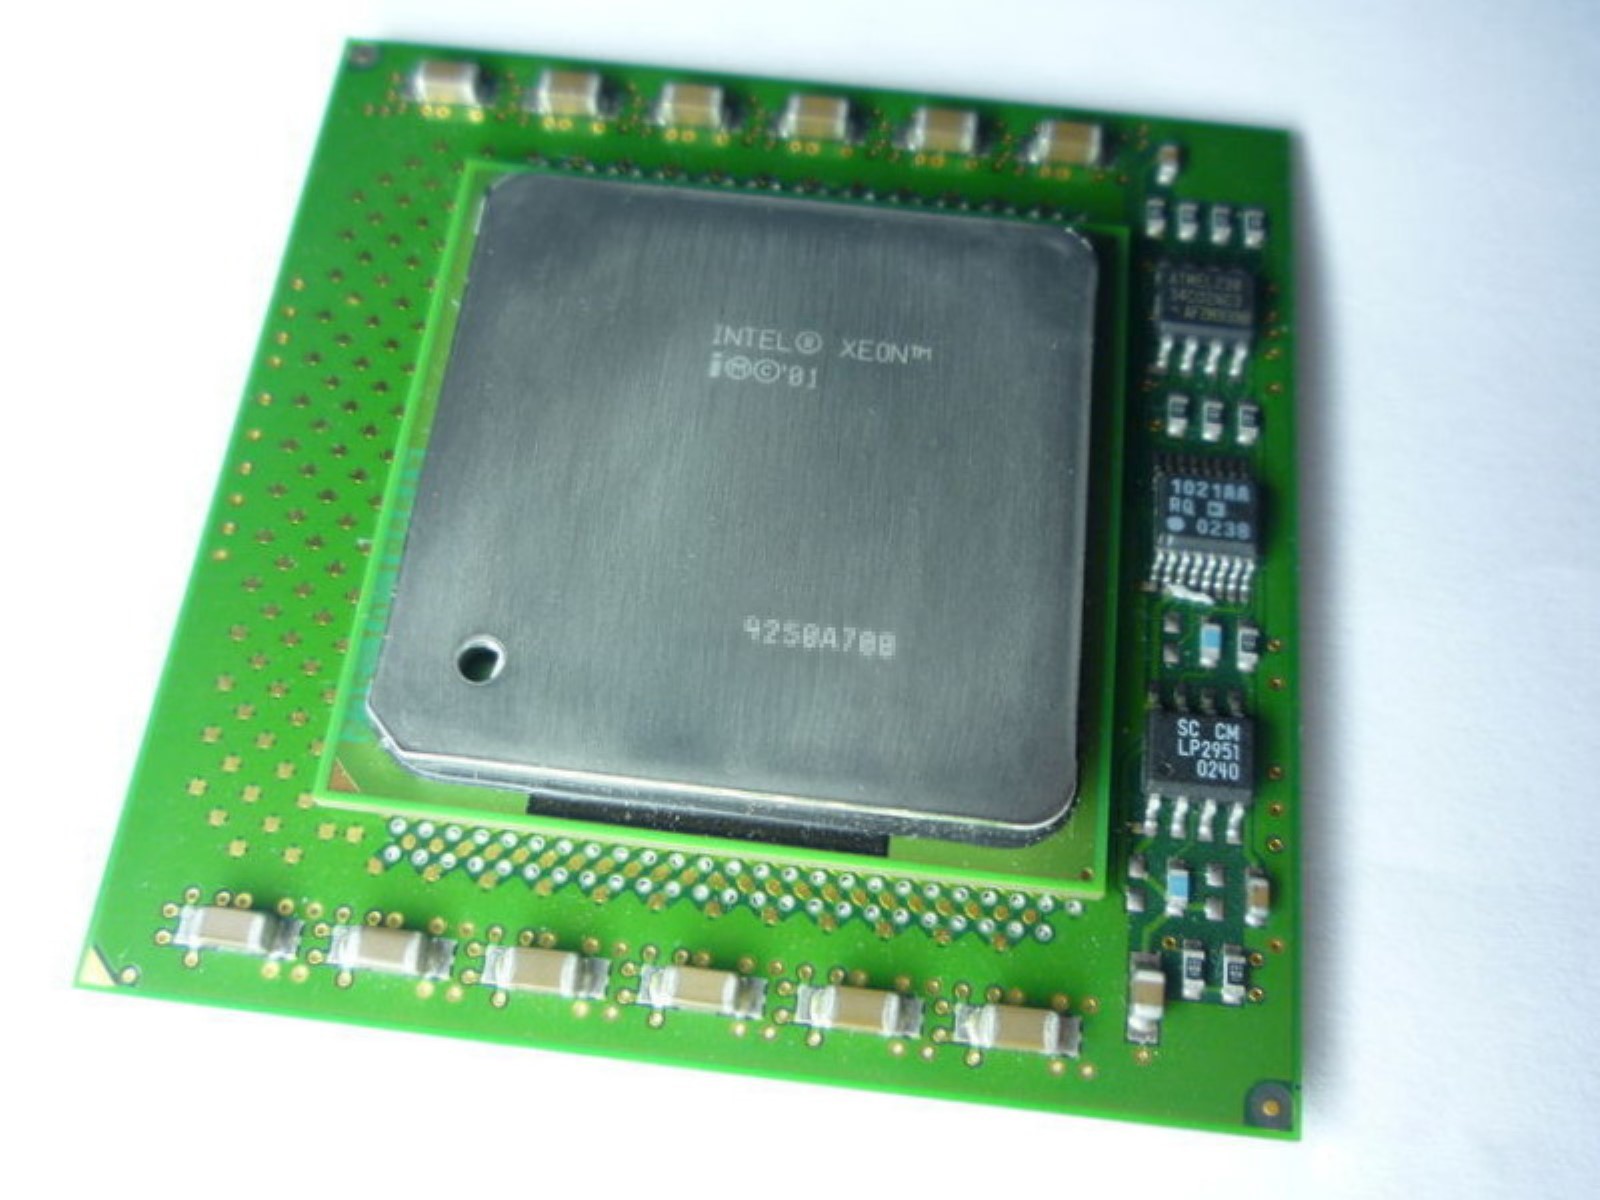 Intel Xeon 603 1.4GHz CPU